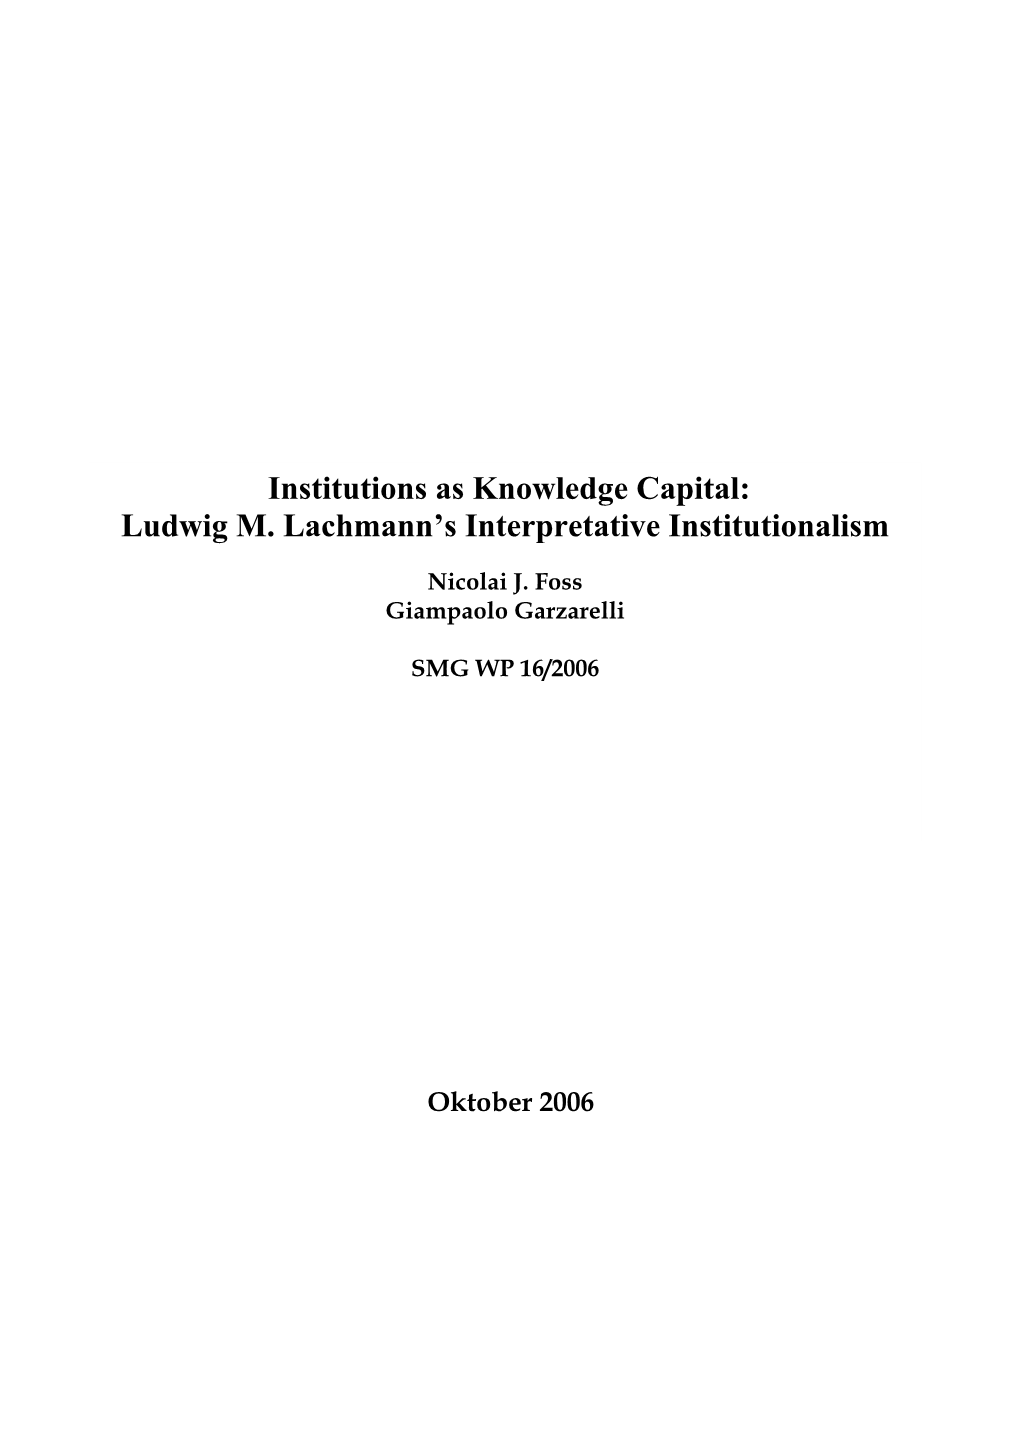 Institutions As Knowledge Capital: Ludwig M. Lachmann's Interpretative Institutionalism